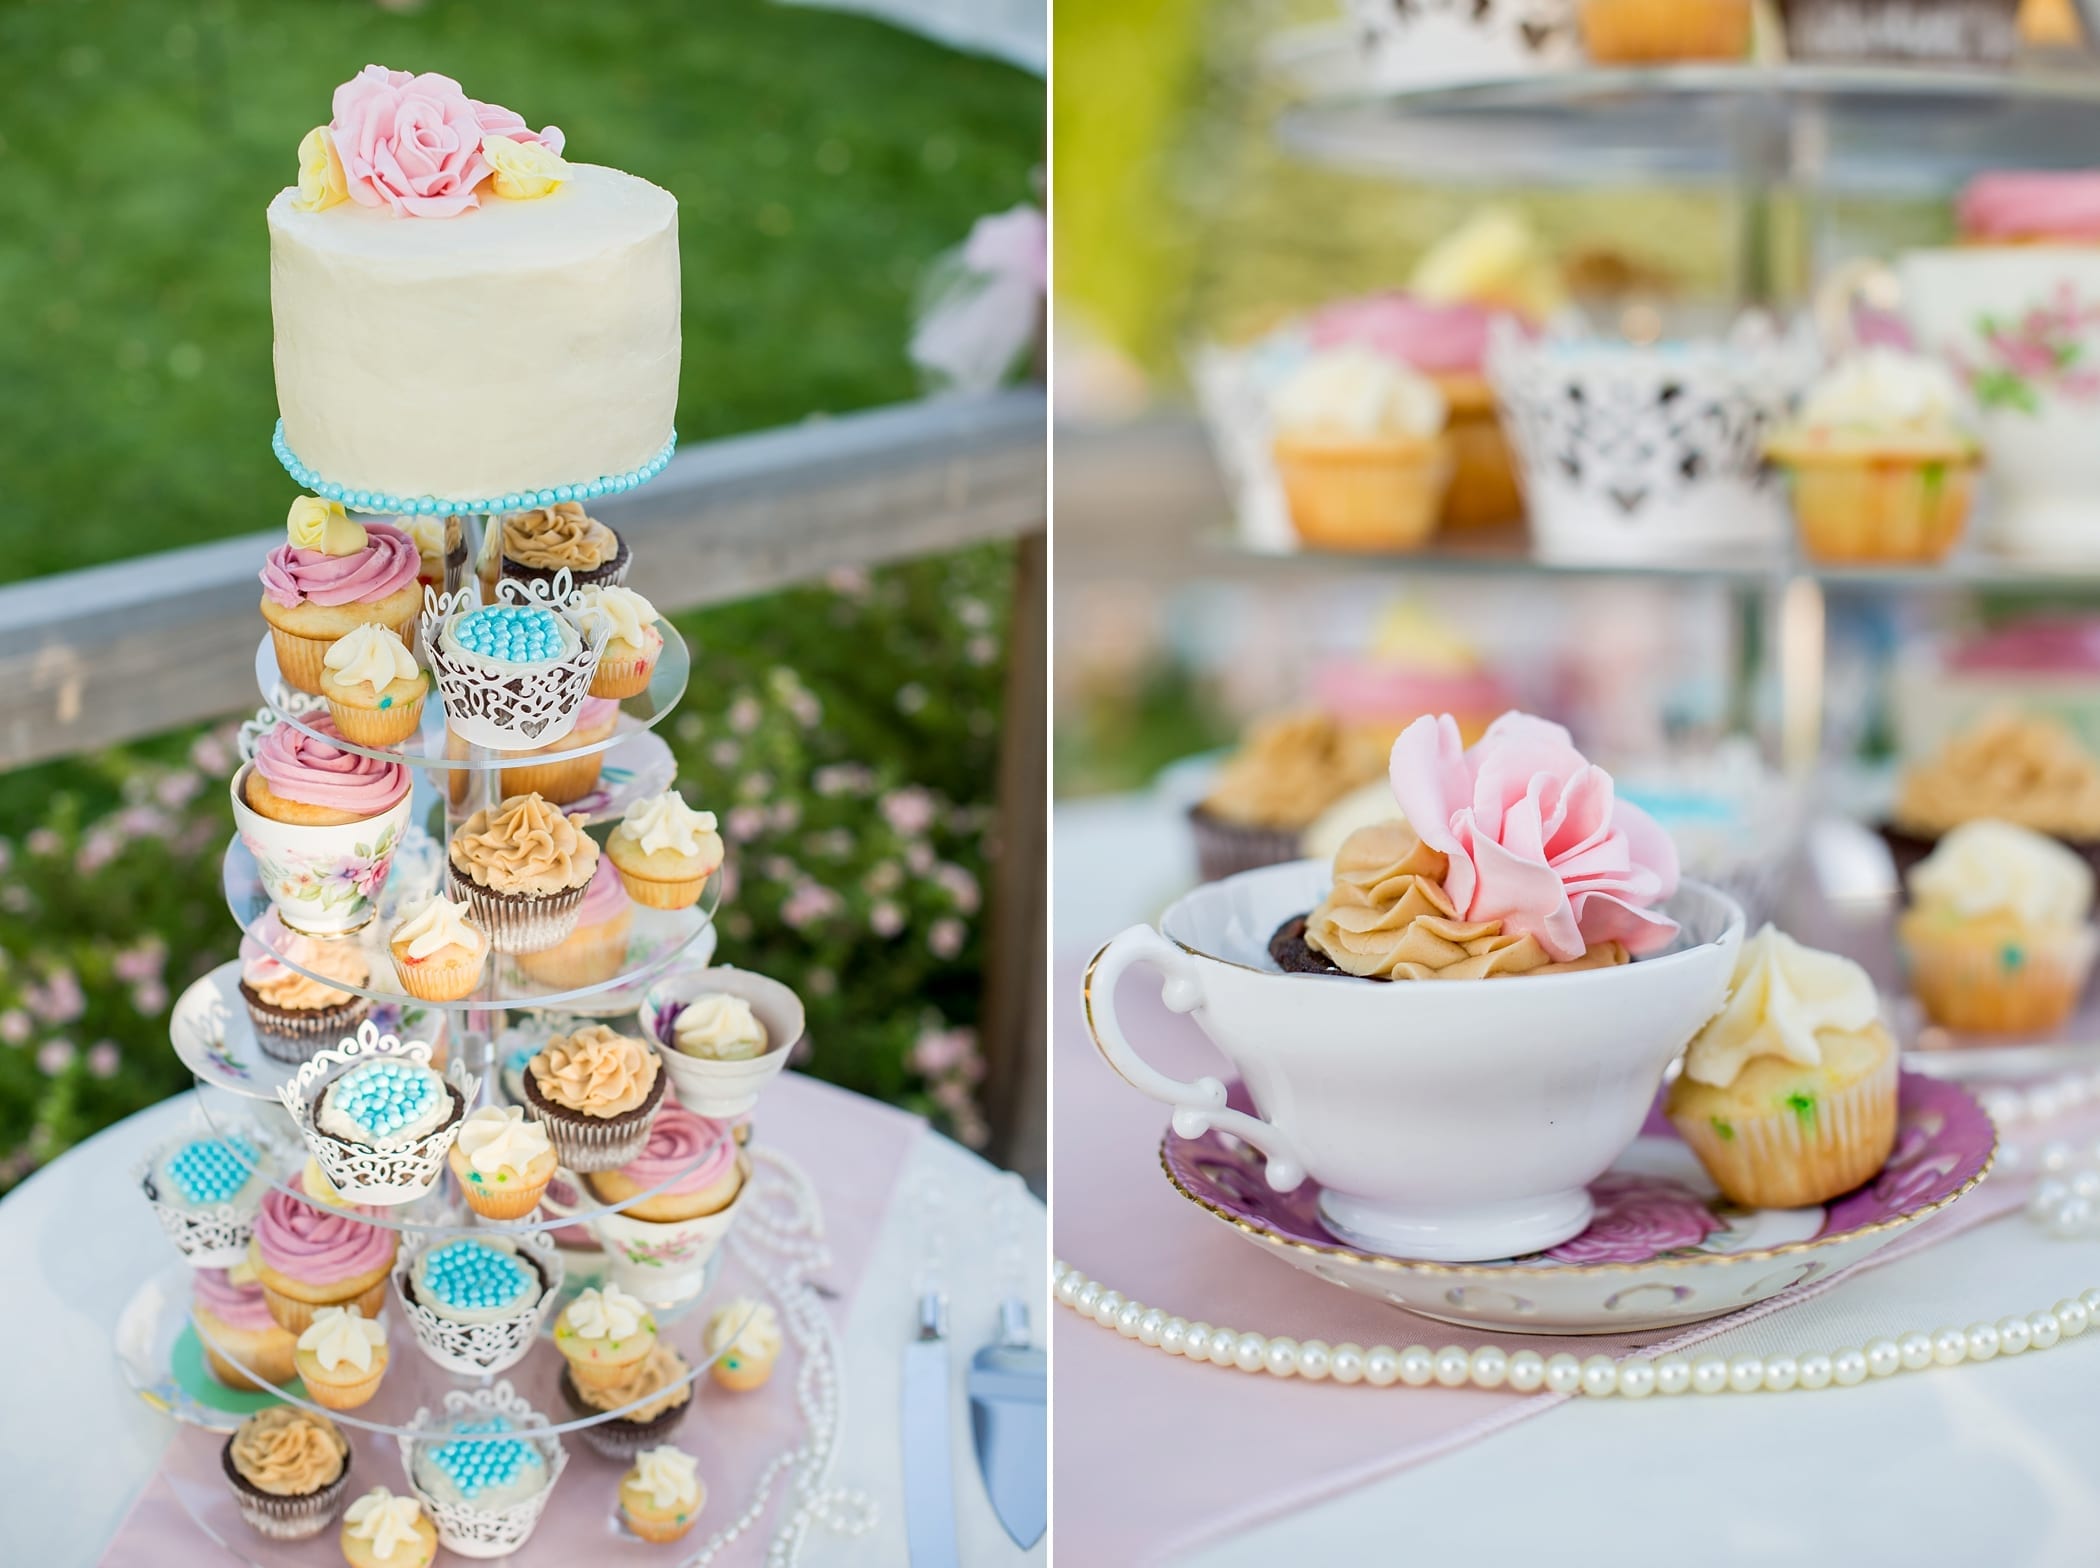 Wedding cupcake cake by Michelle & Logan Photo+Films